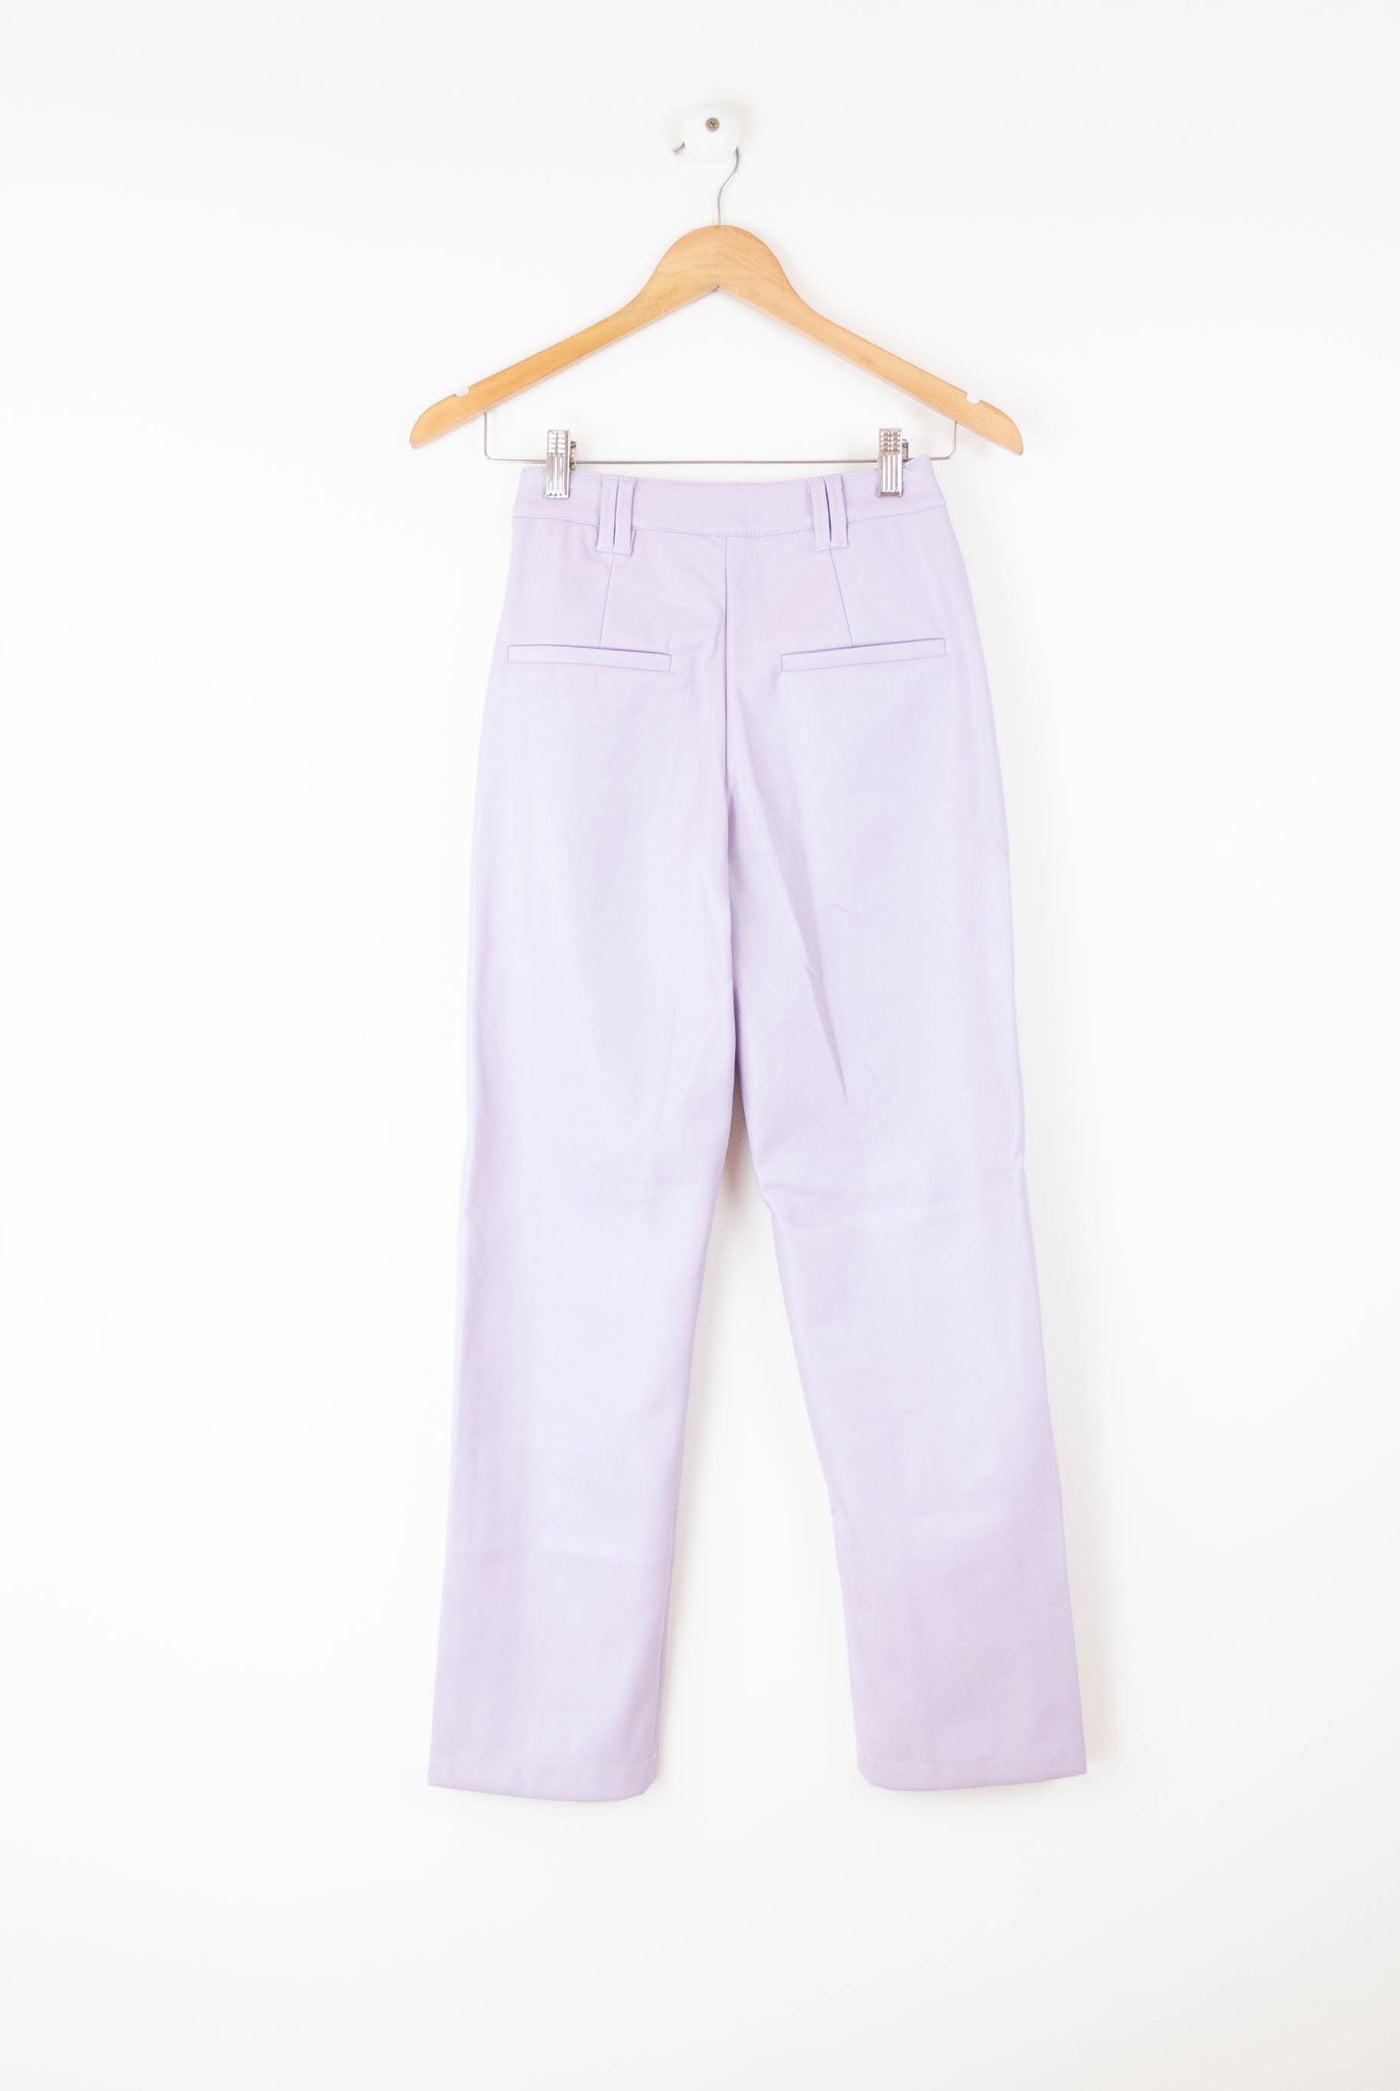 Pantalón efecto piel lila